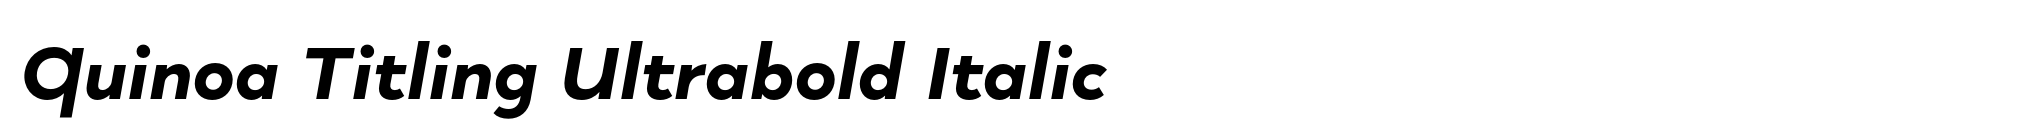 Quinoa Titling Ultrabold Italic image